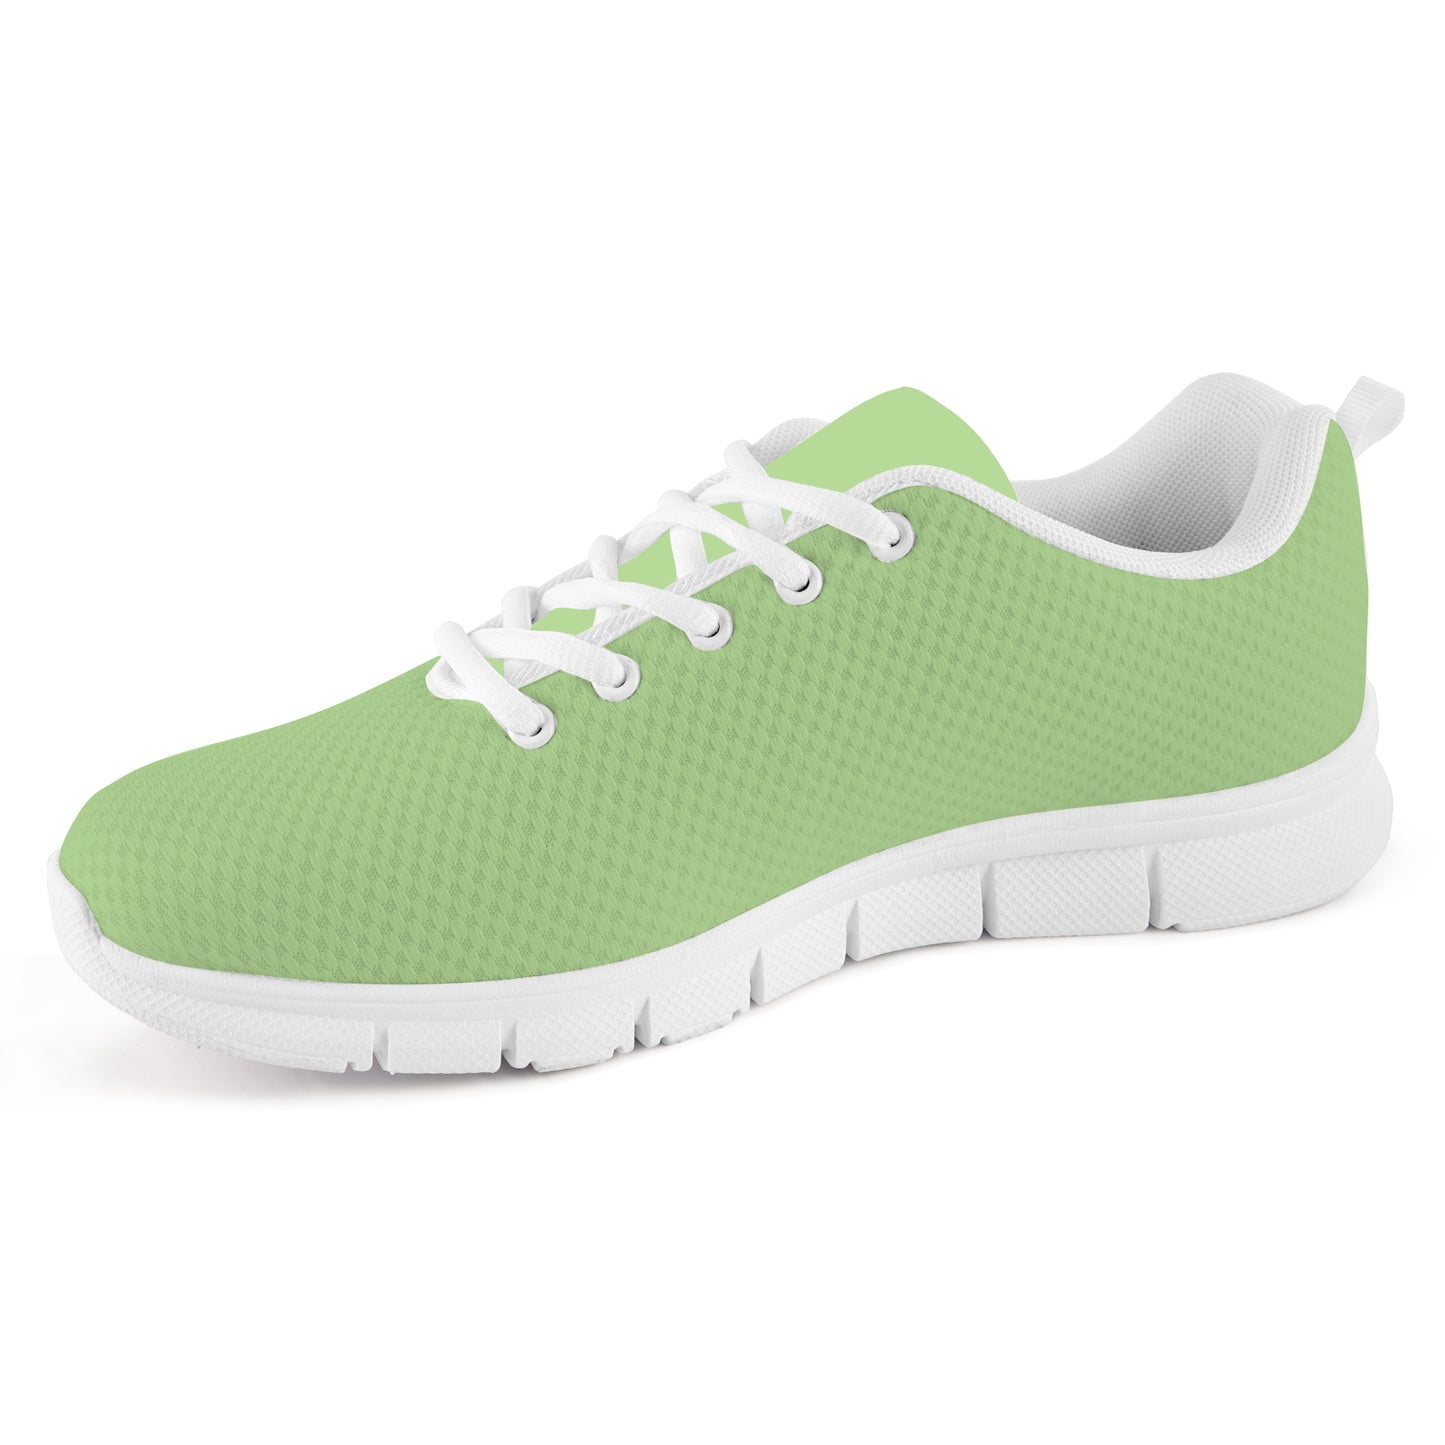 Men's Breathable Sneakers - Light Green